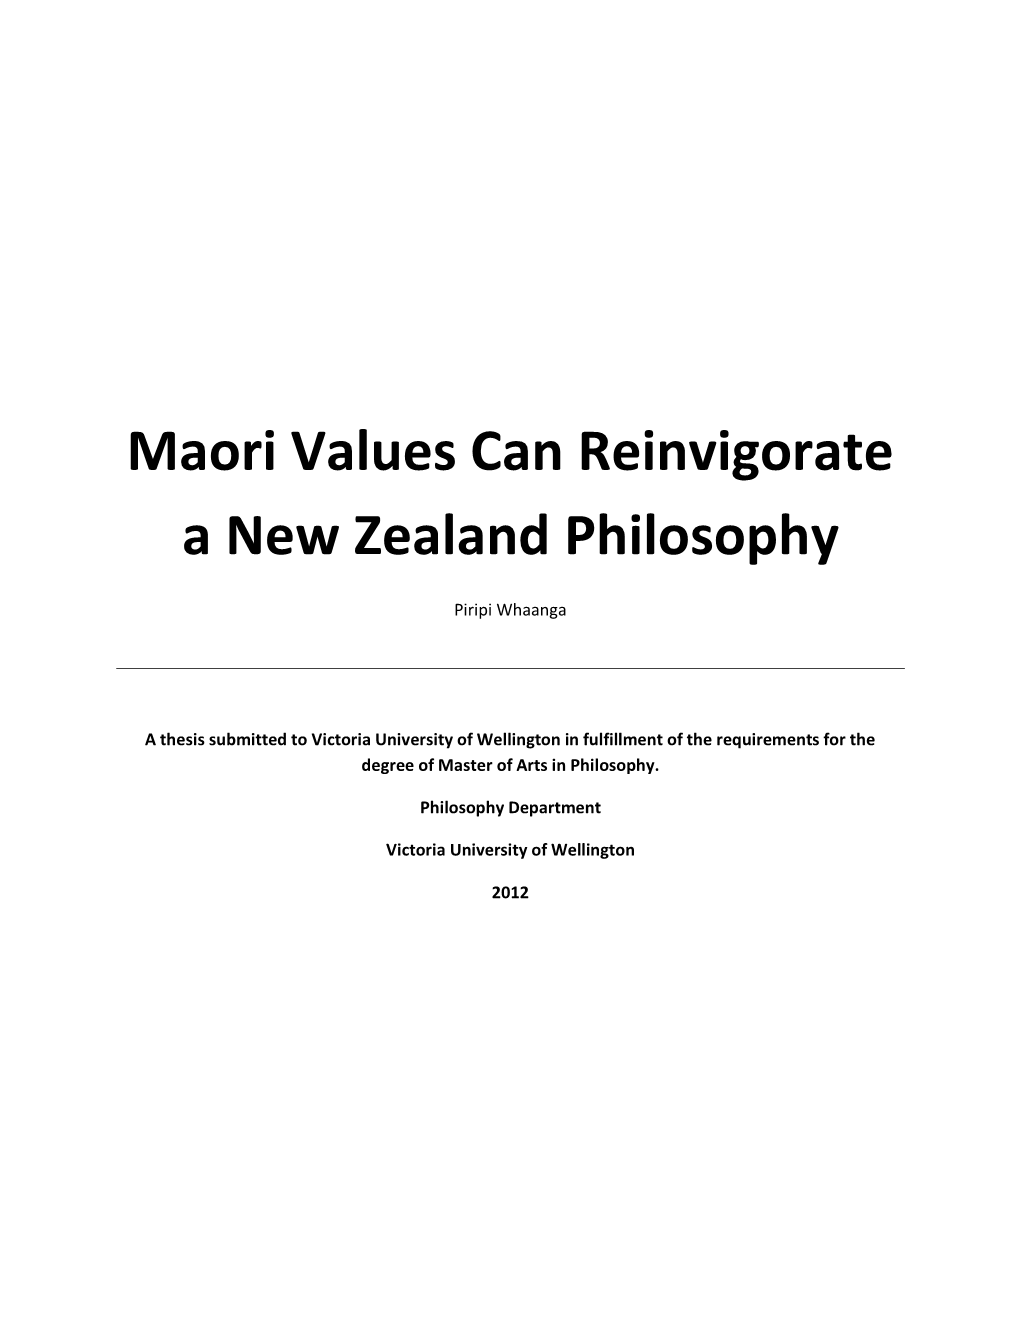 Maori Values Can Reinvigorate a New Zealand Philosophy